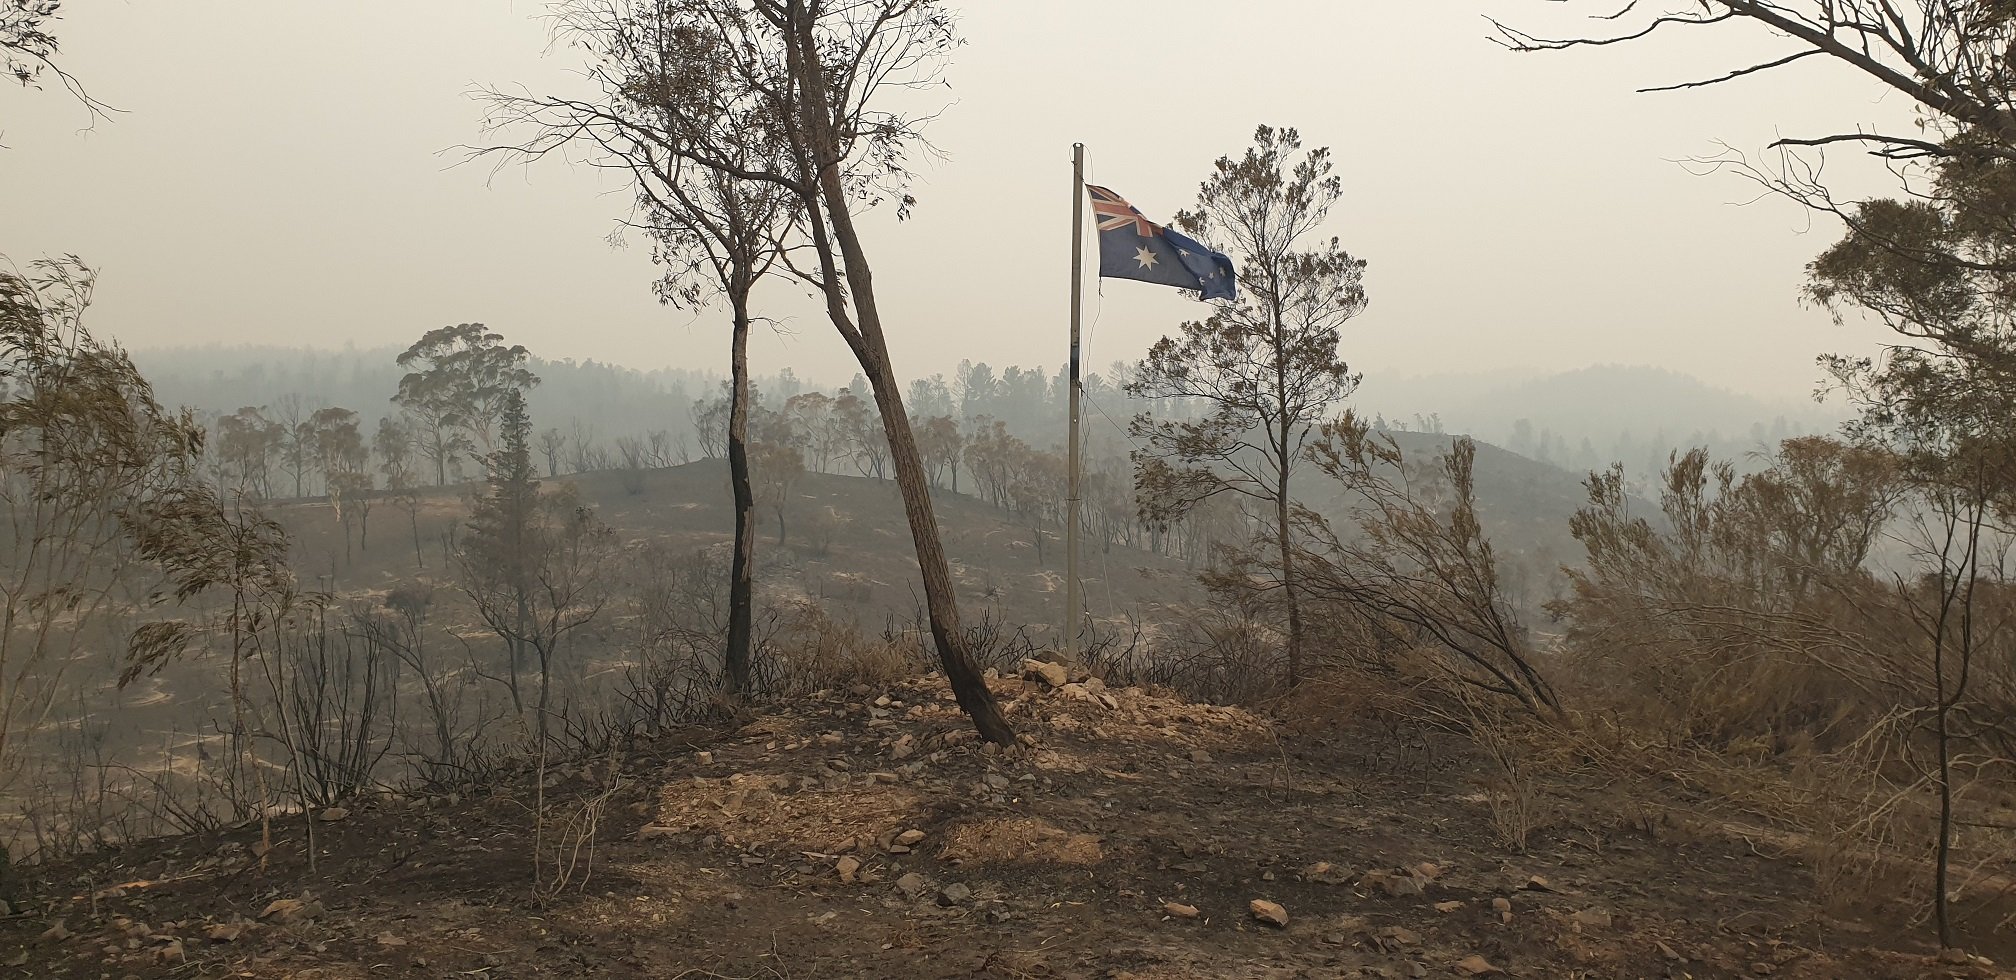 bushfire image